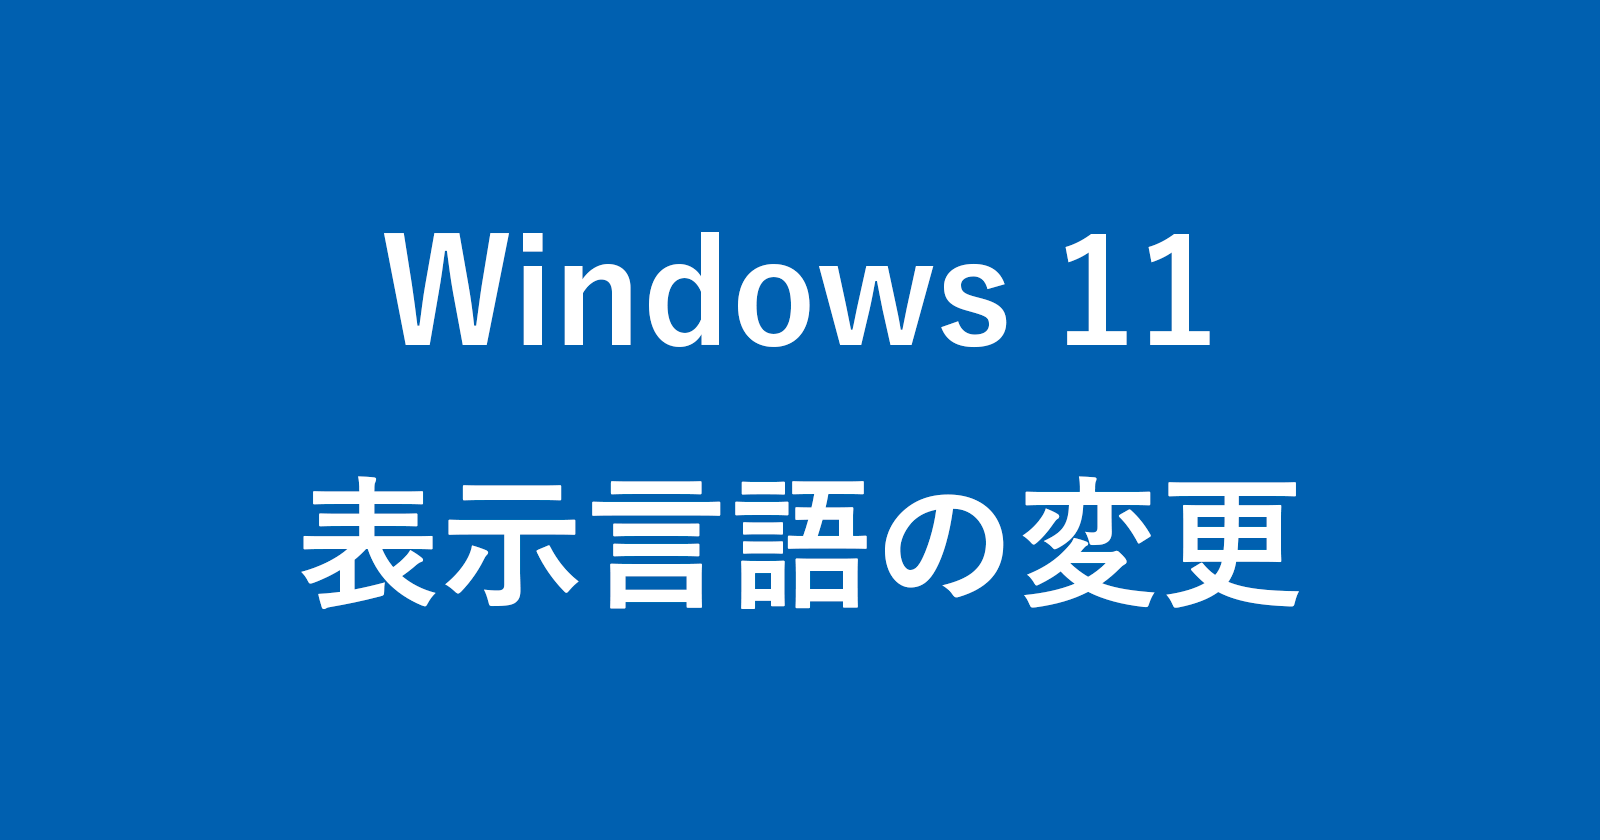 windows 11 display language